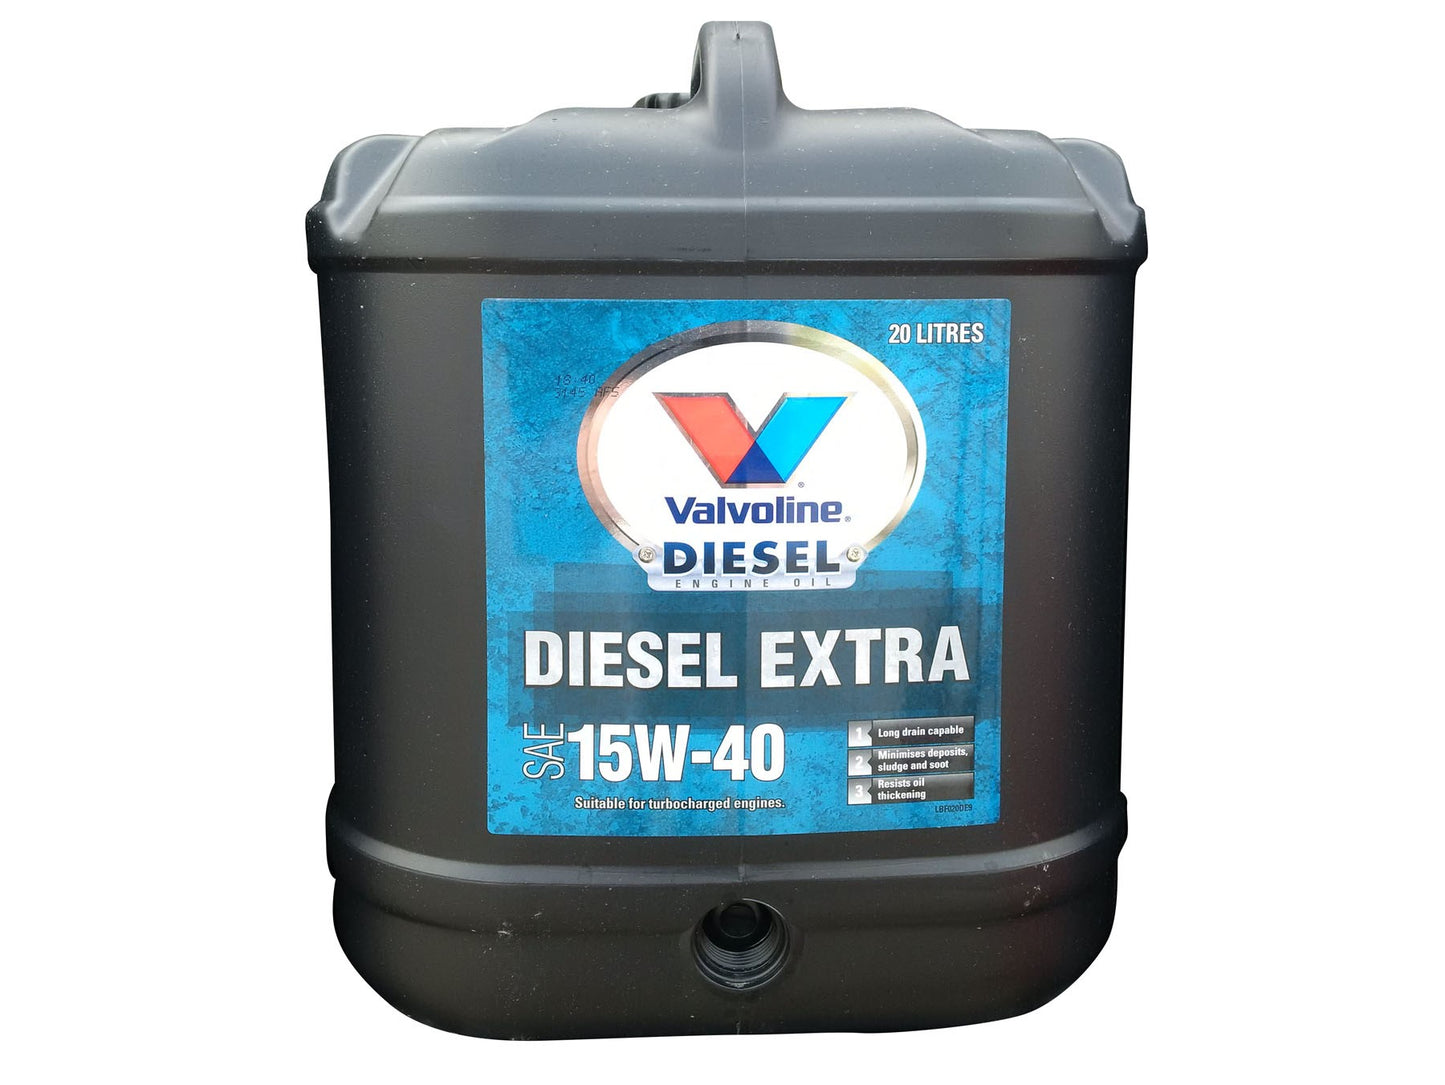 Valvoline Diesel Extra 15W40 Oil